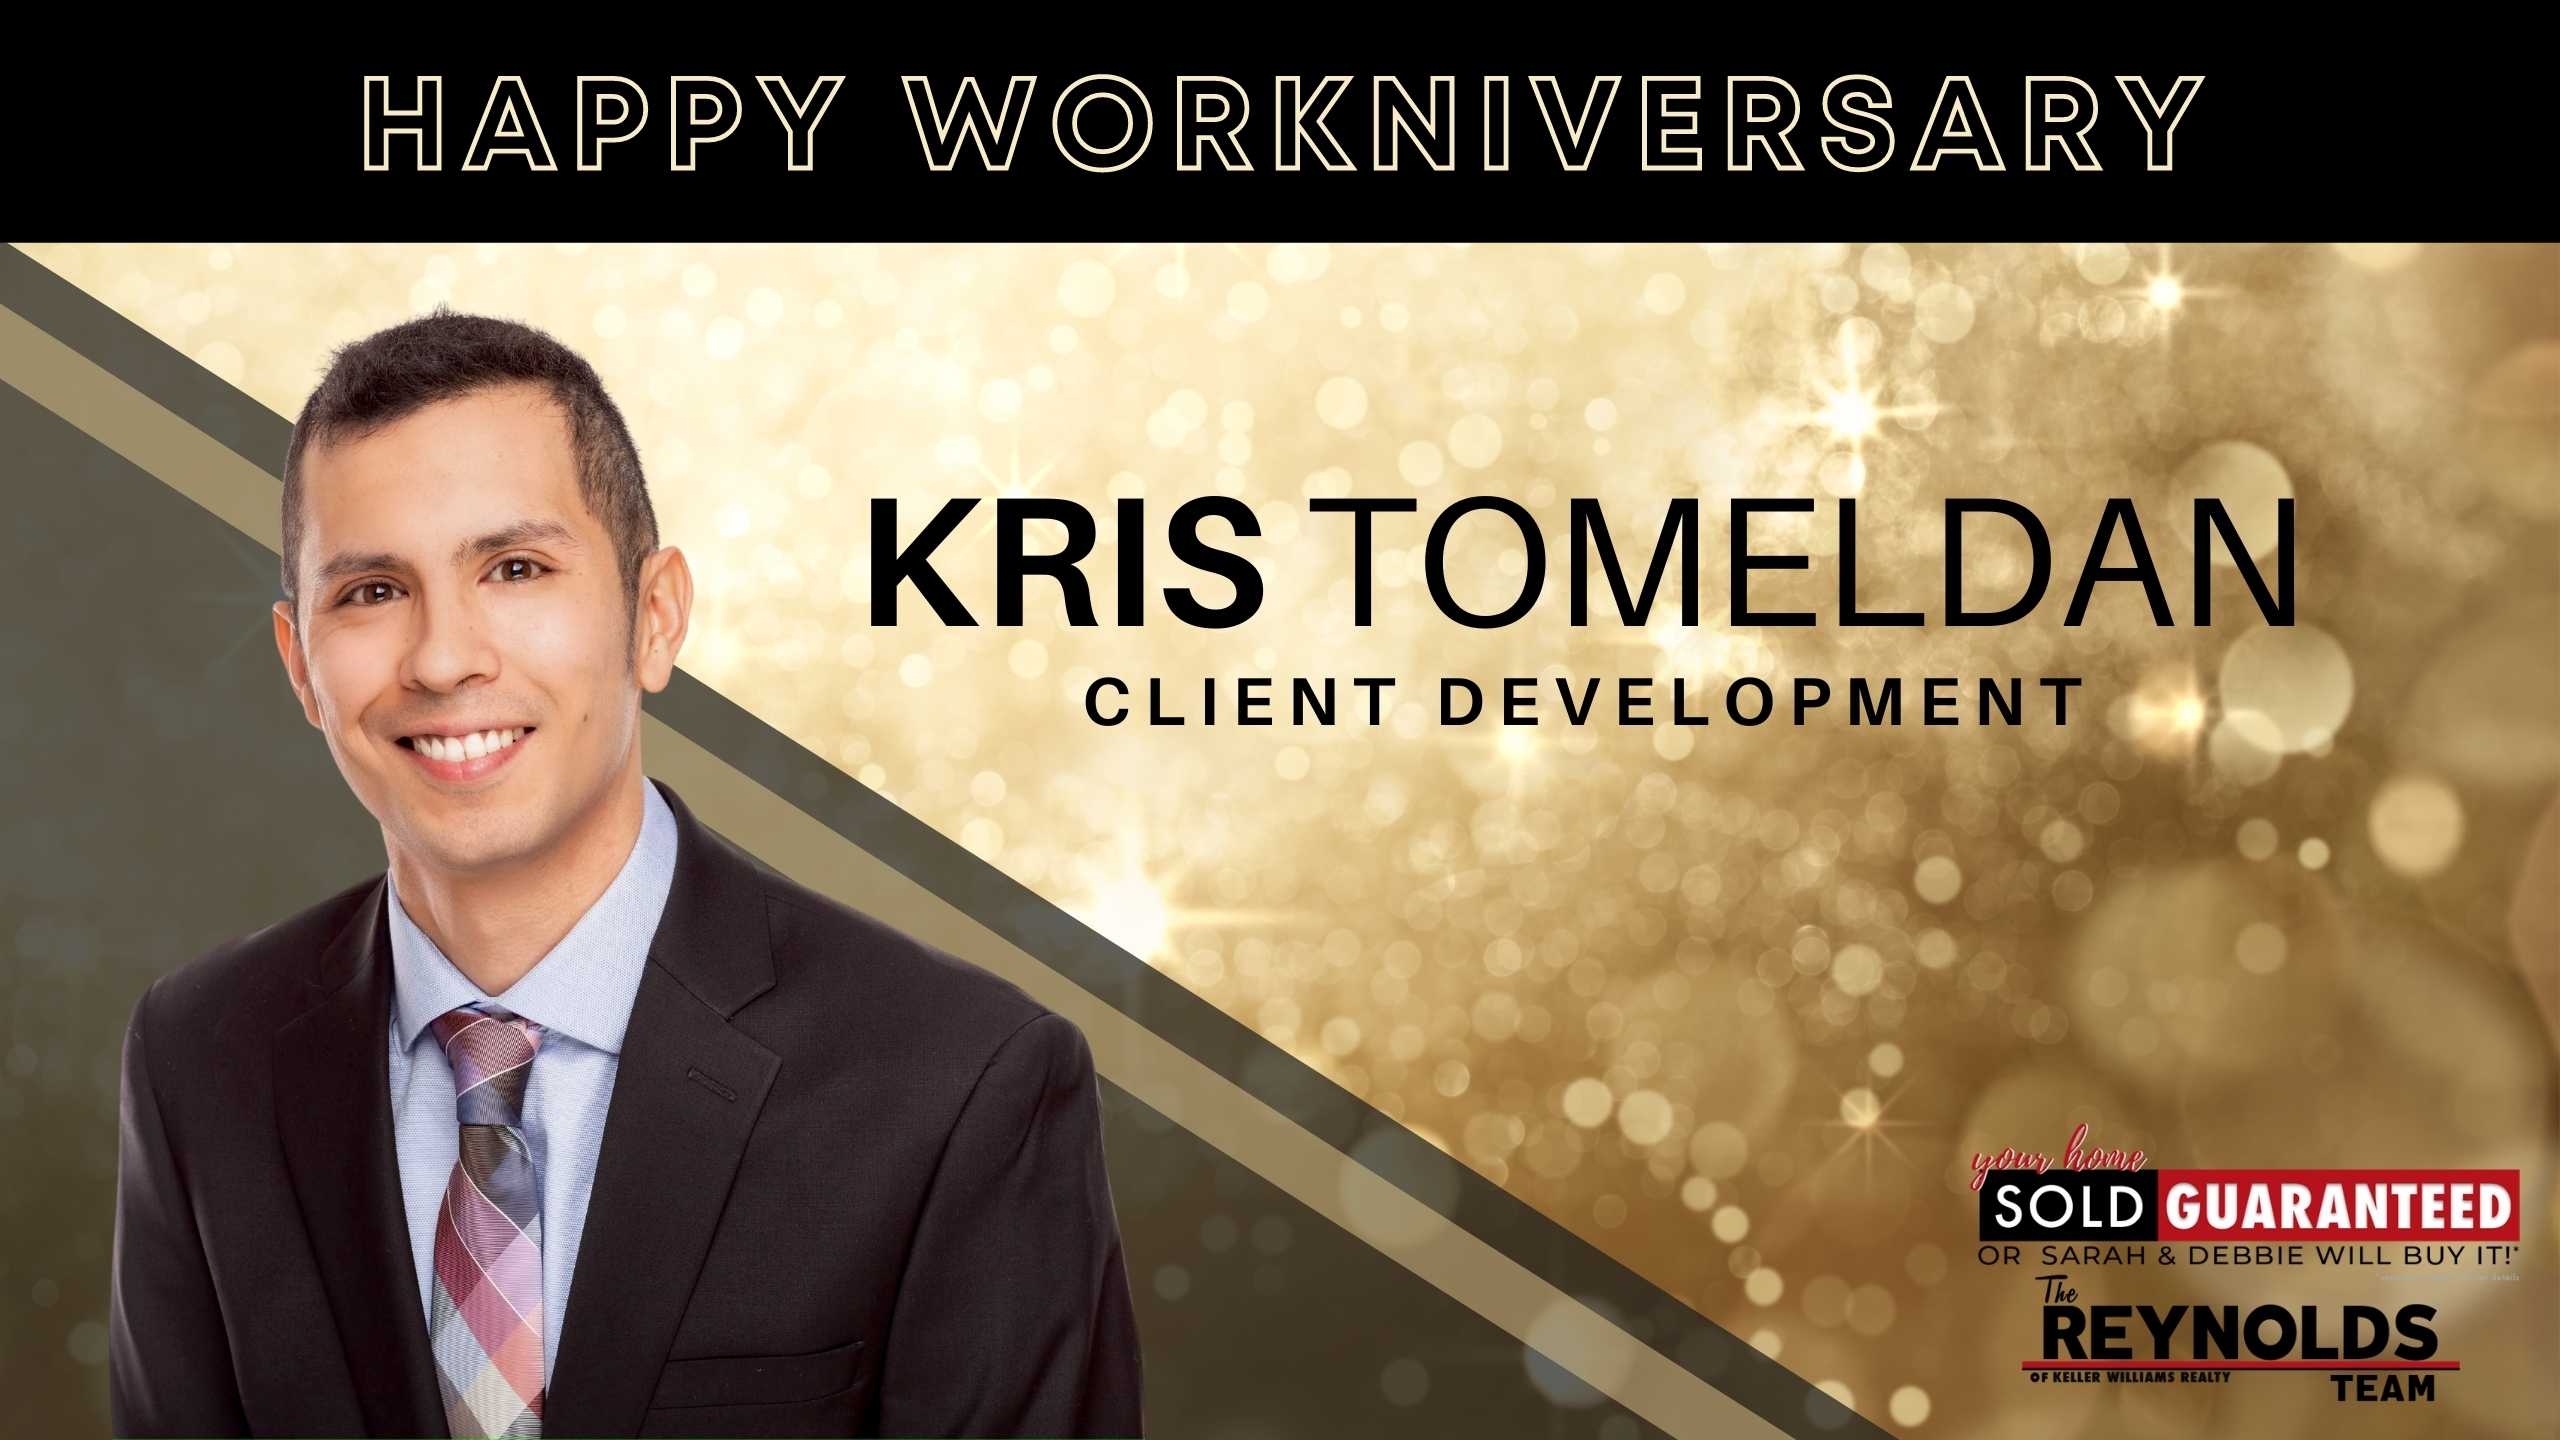 Happy Workniversary, Kris Tomeldan!